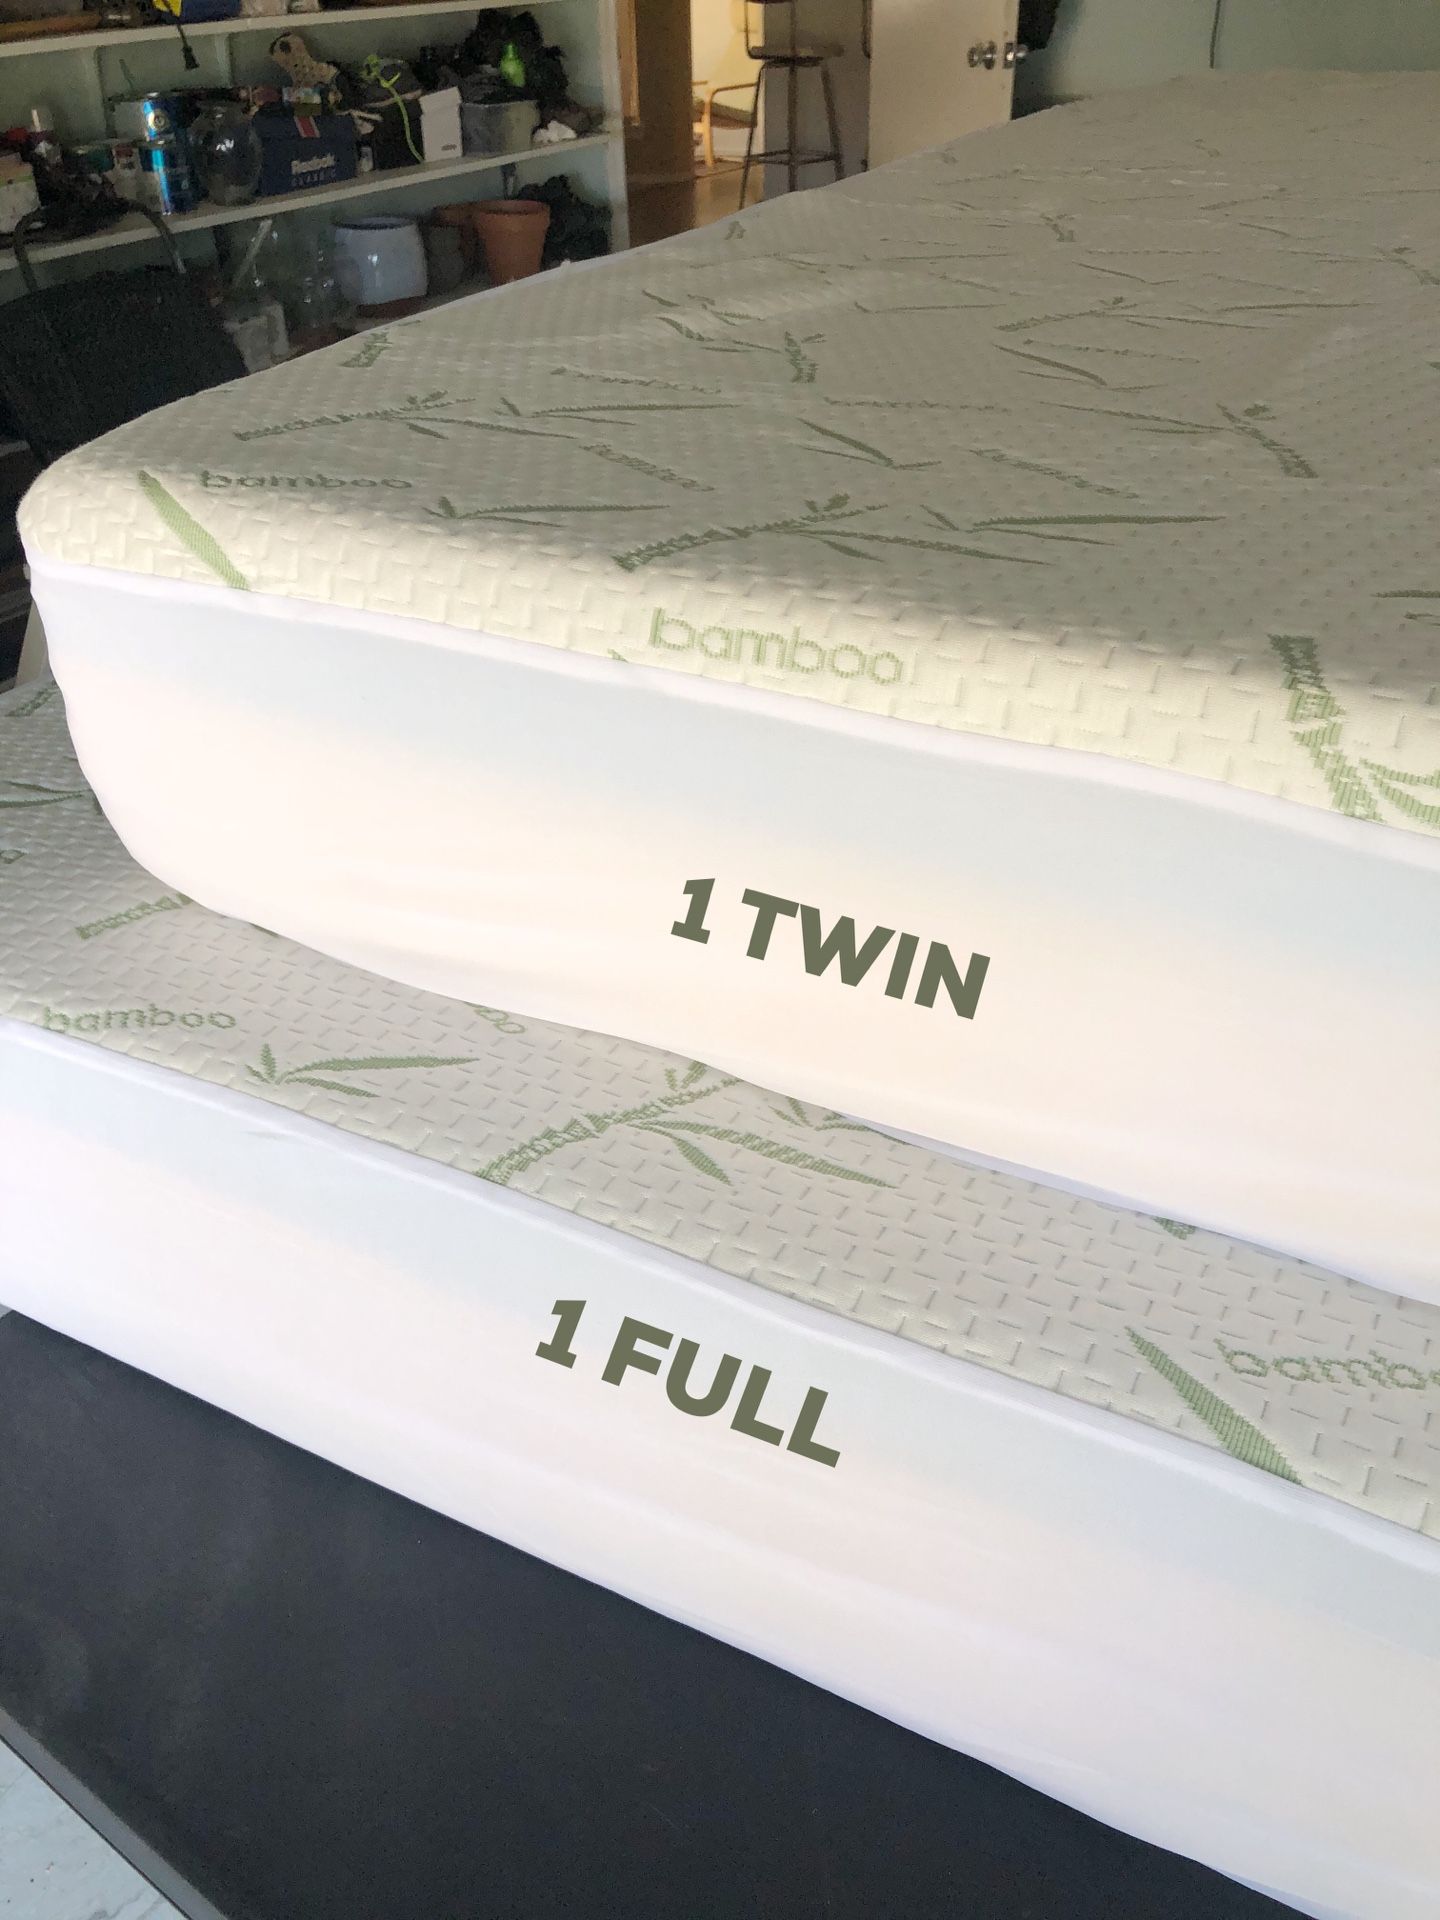 1 Full Memory foam mattress for bed + brand new mattress protector